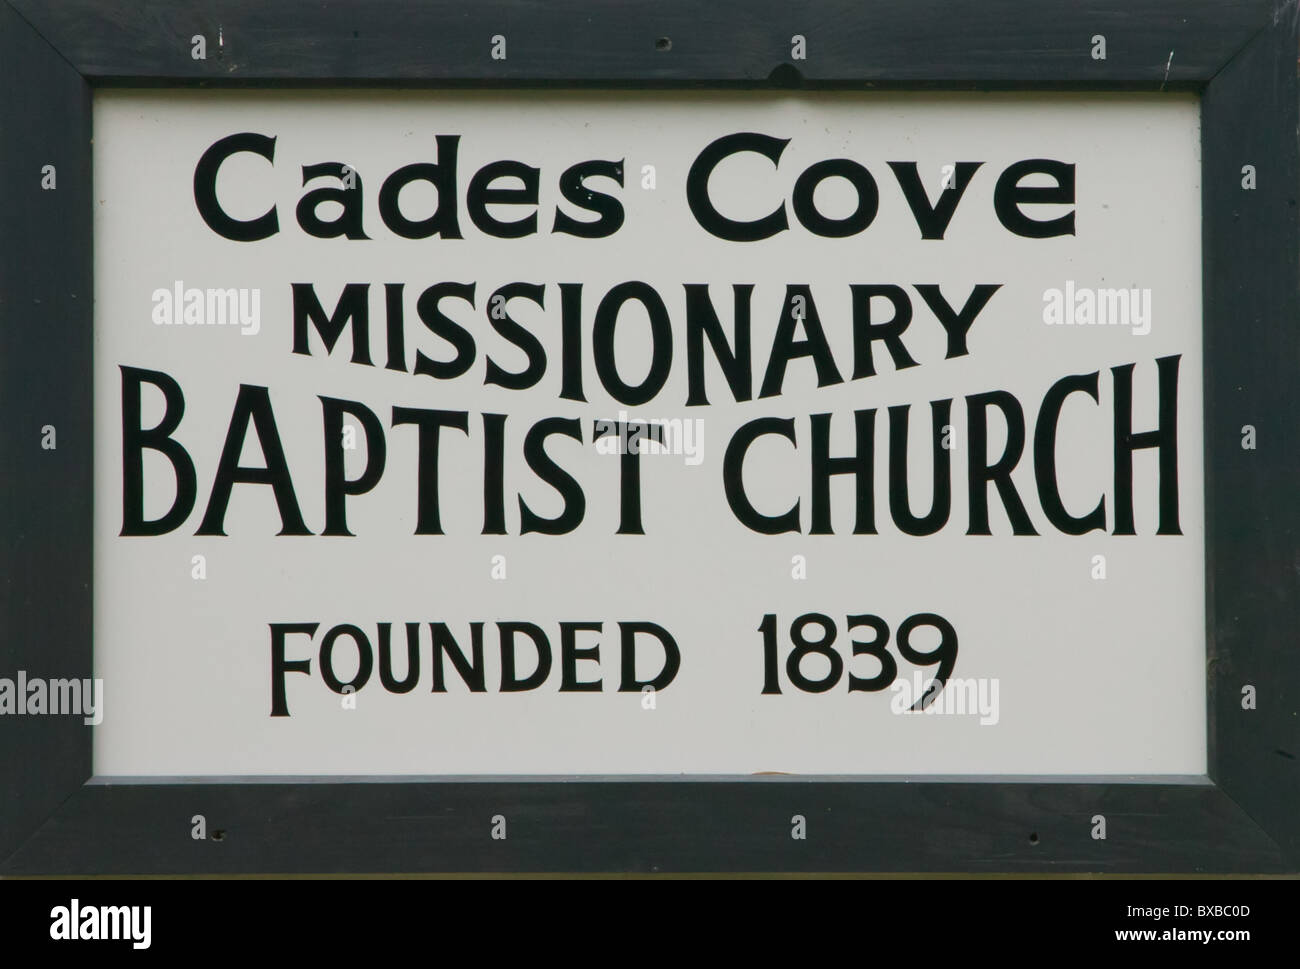 Zeichen für Cades Cove Missionary Baptist Church in Great Smoky Mountains Nationalpark. Stockfoto